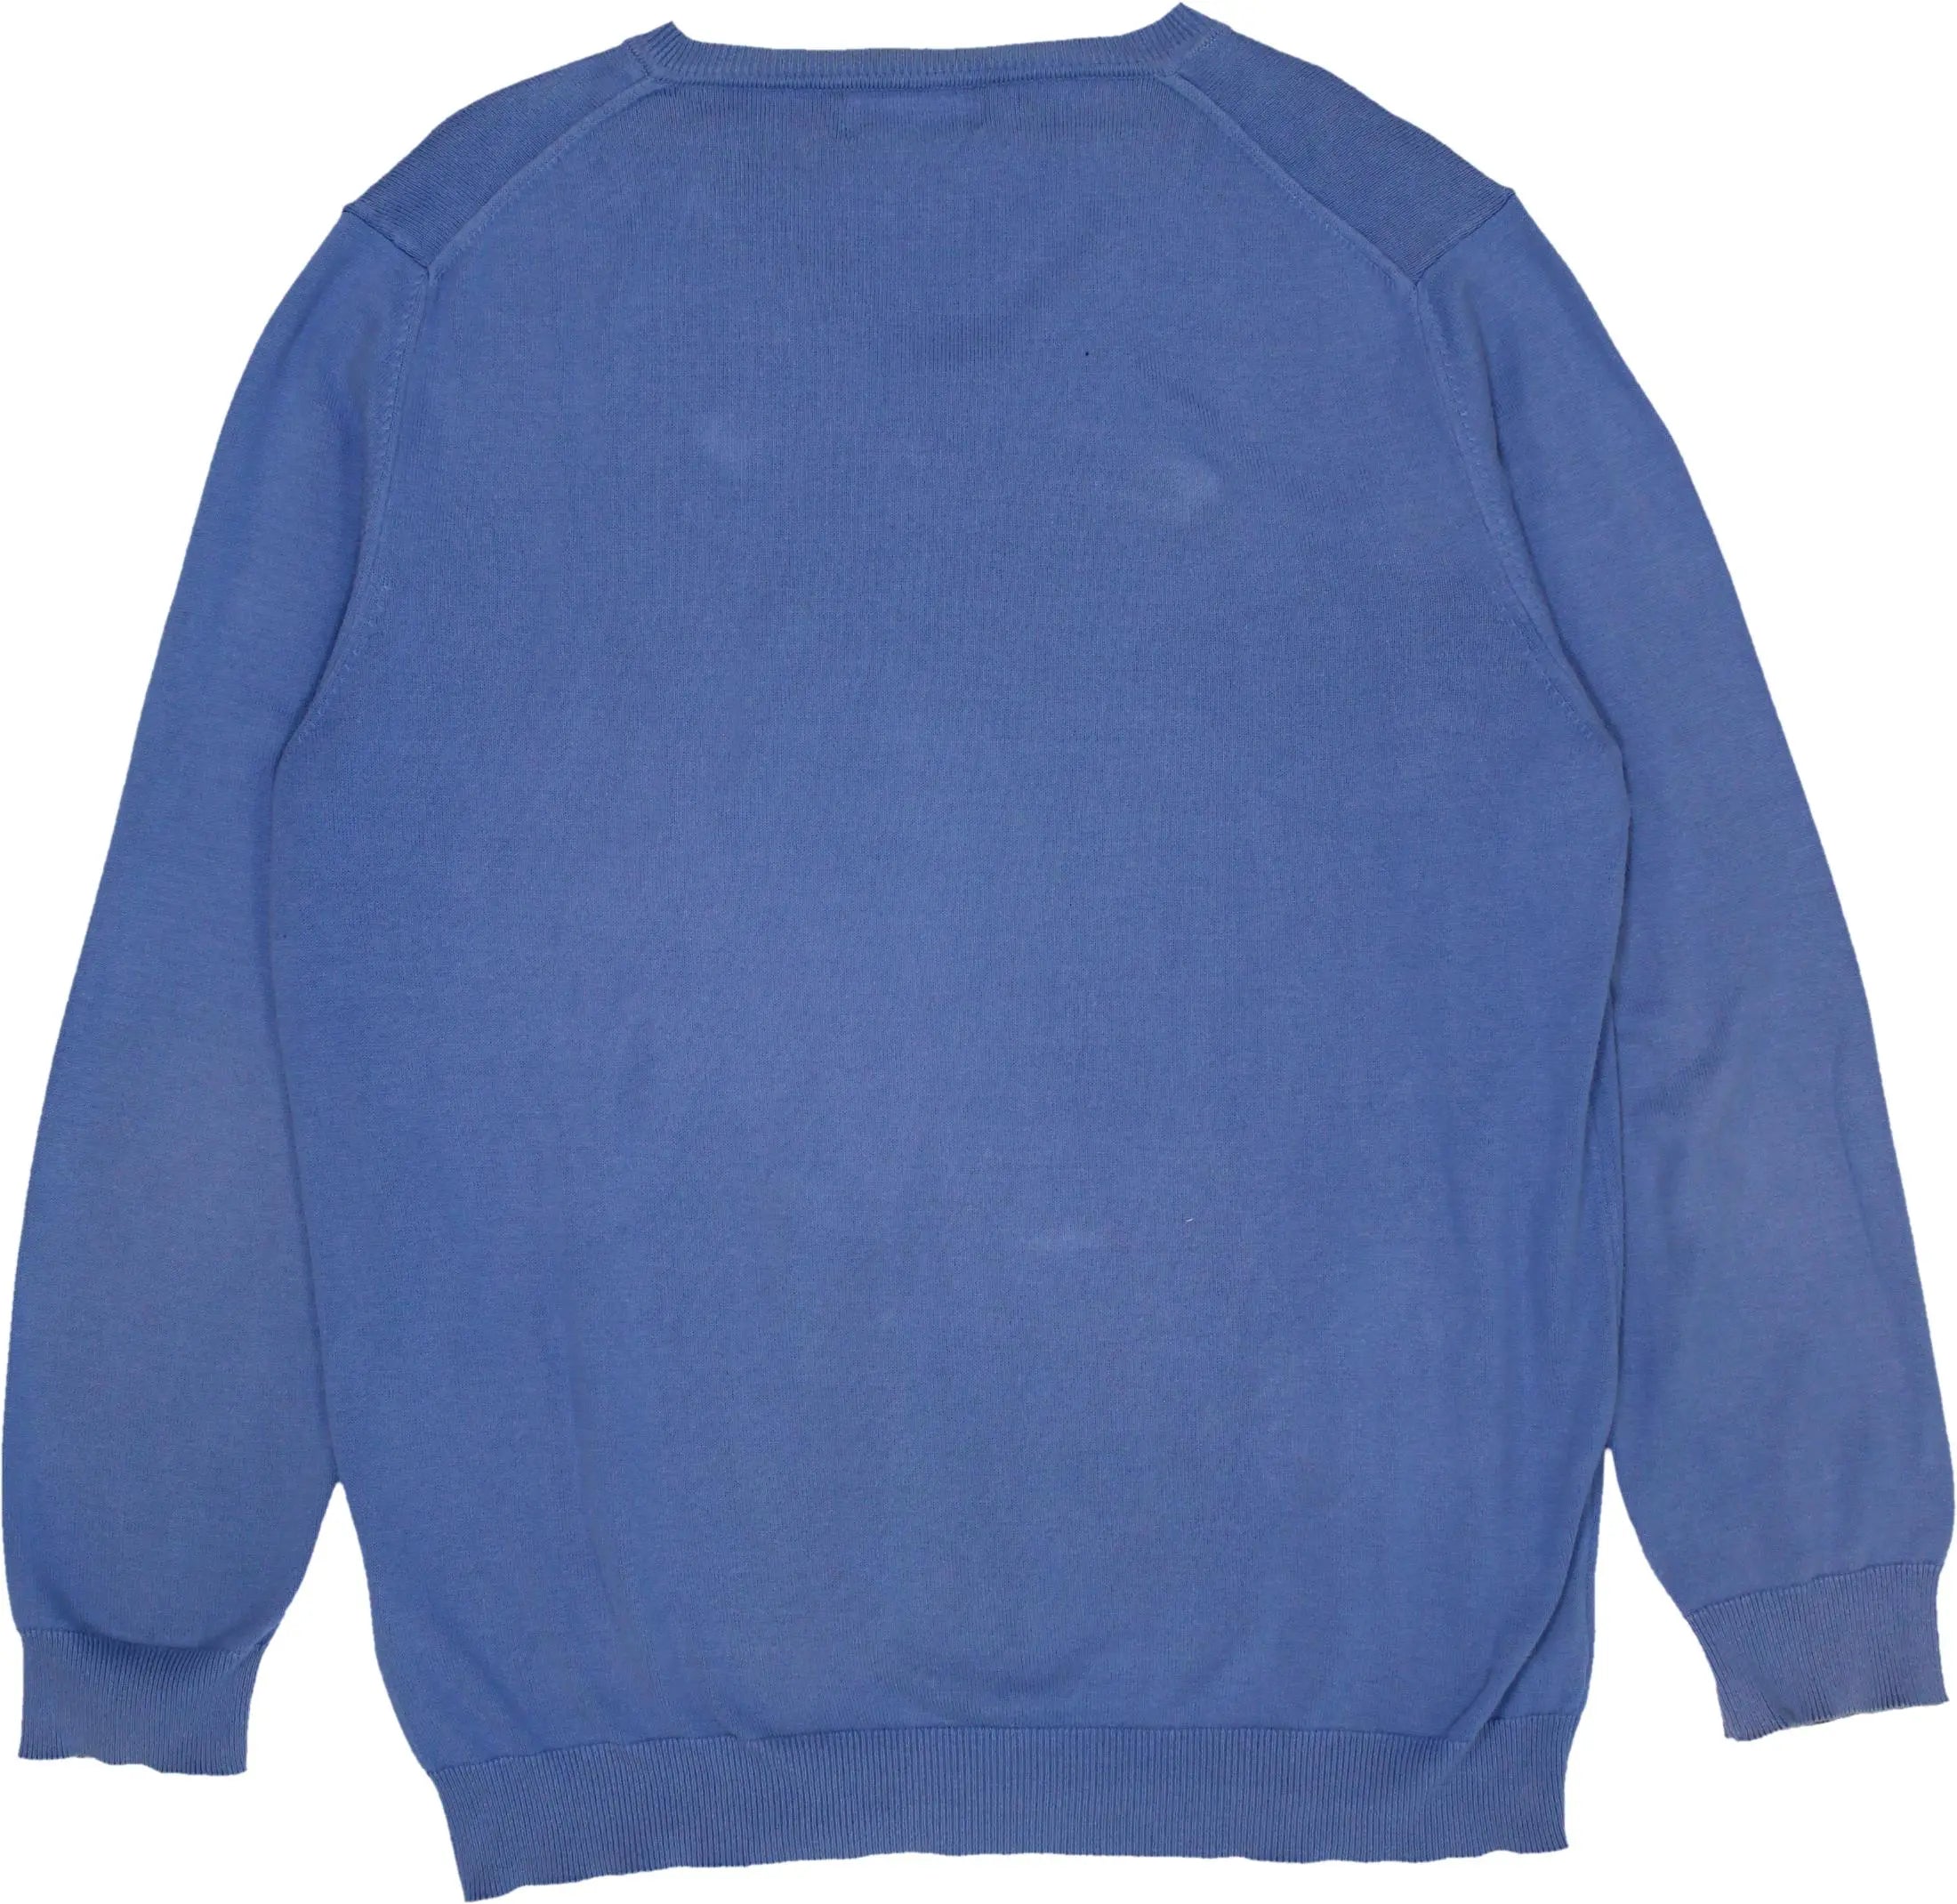 Ralph Lauren - V-neck Sweater by Ralph Lauren- ThriftTale.com - Vintage and second handclothing